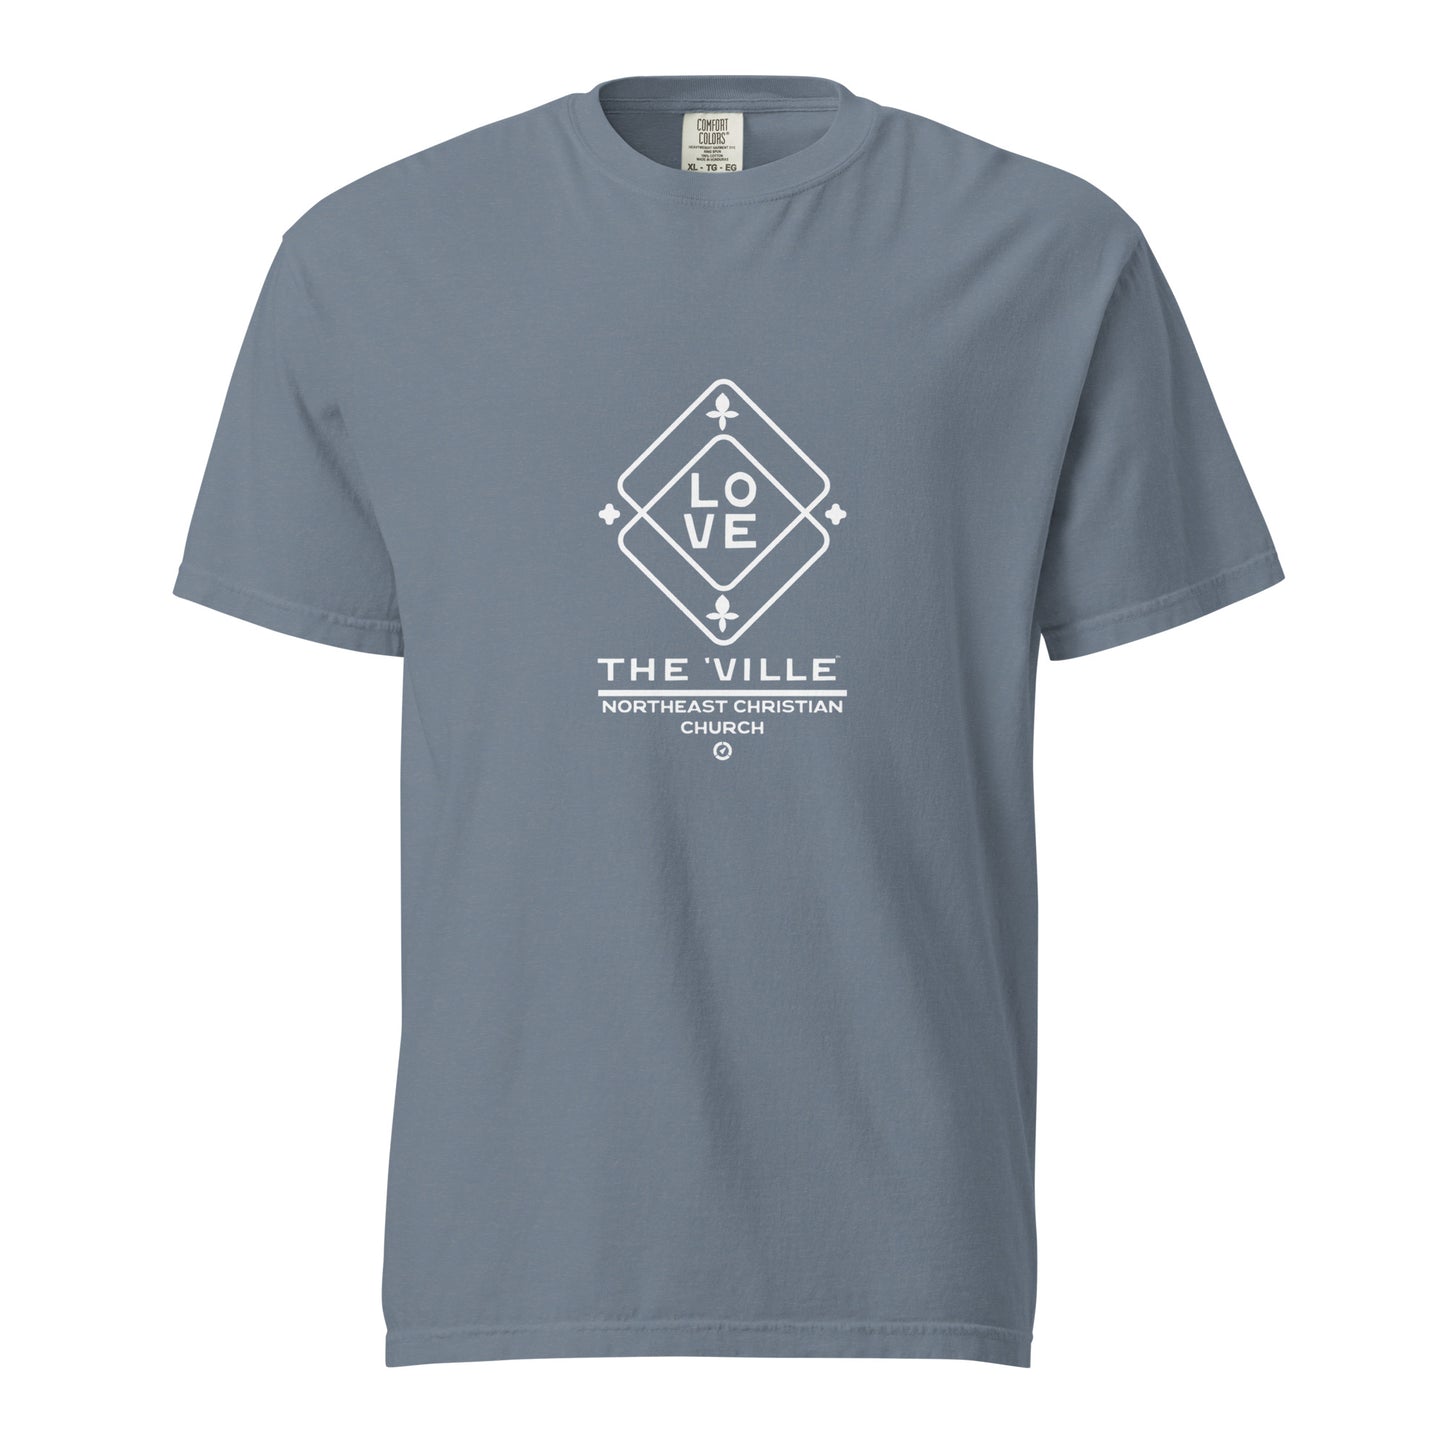 The 'Ville T-Shirt White Edition - Comfort Colors